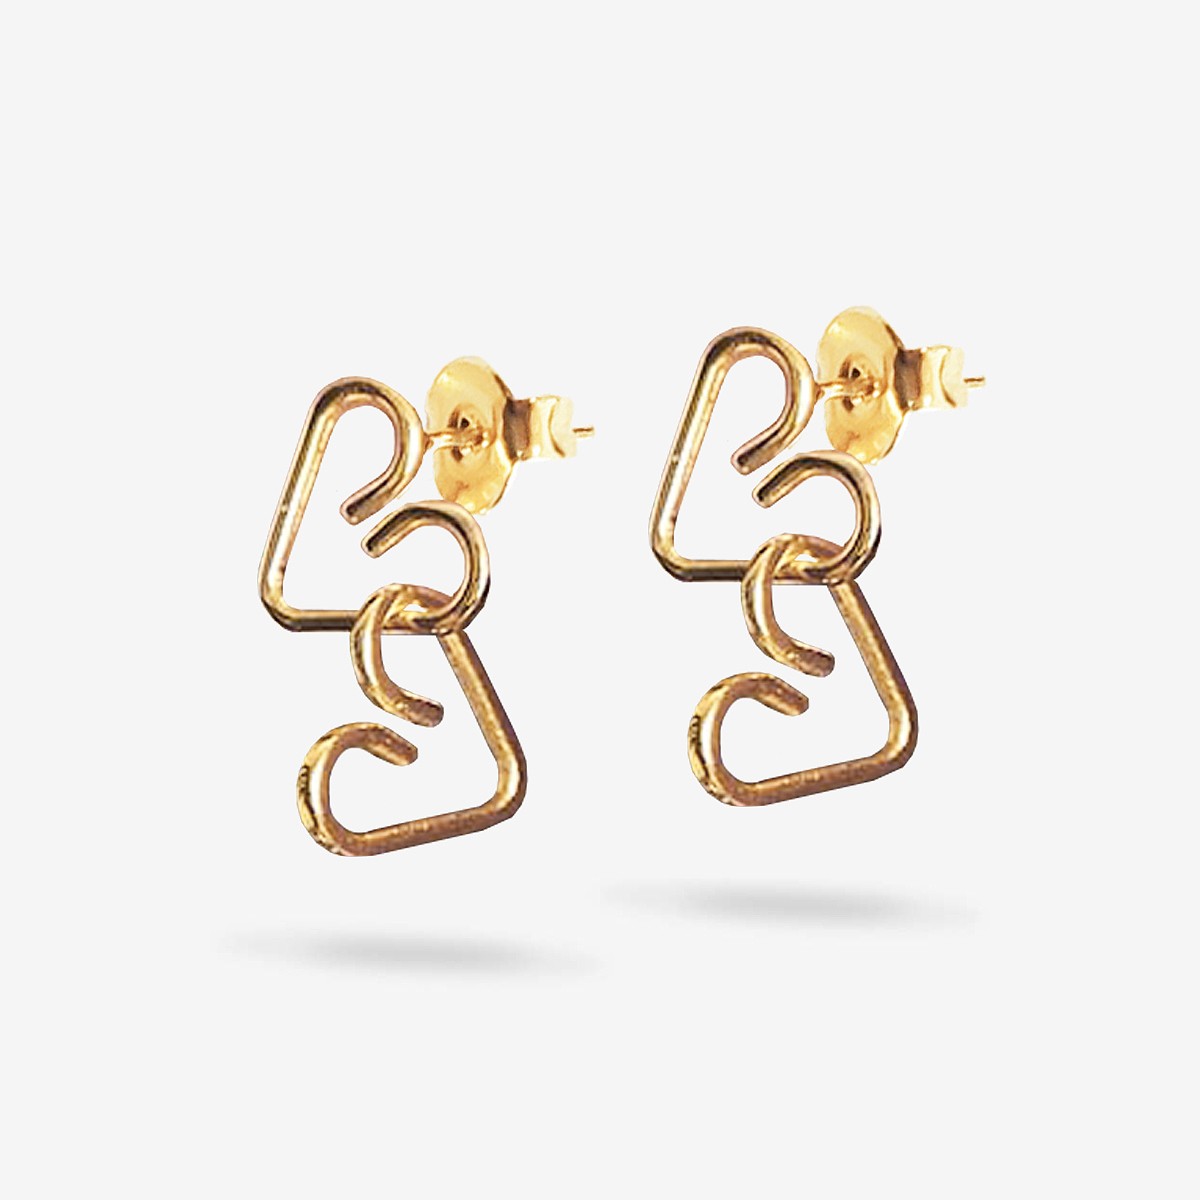 Intertwined Hearts Earrings - Ohrhänger - 18k vergoldet